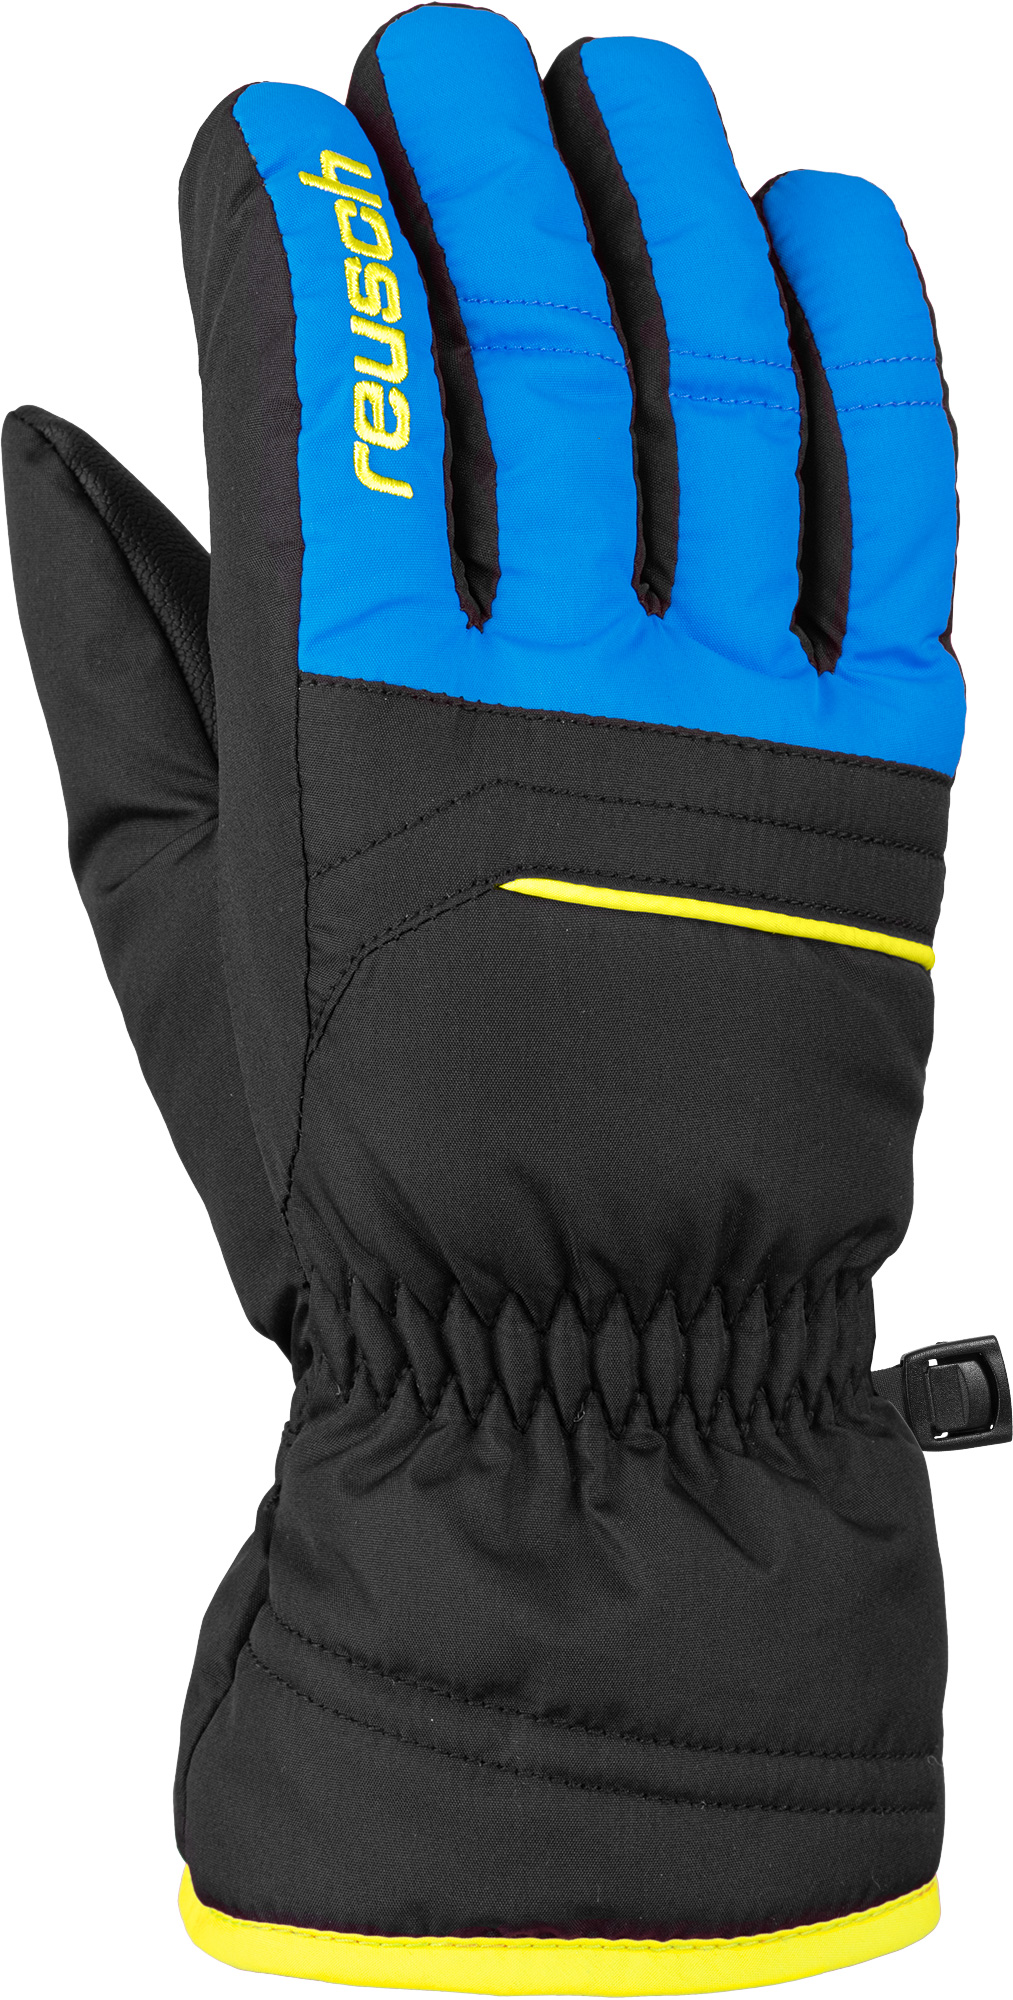 Перчатки Reusch Alan, black/brilliant blue/safety yellow, 5 Inch